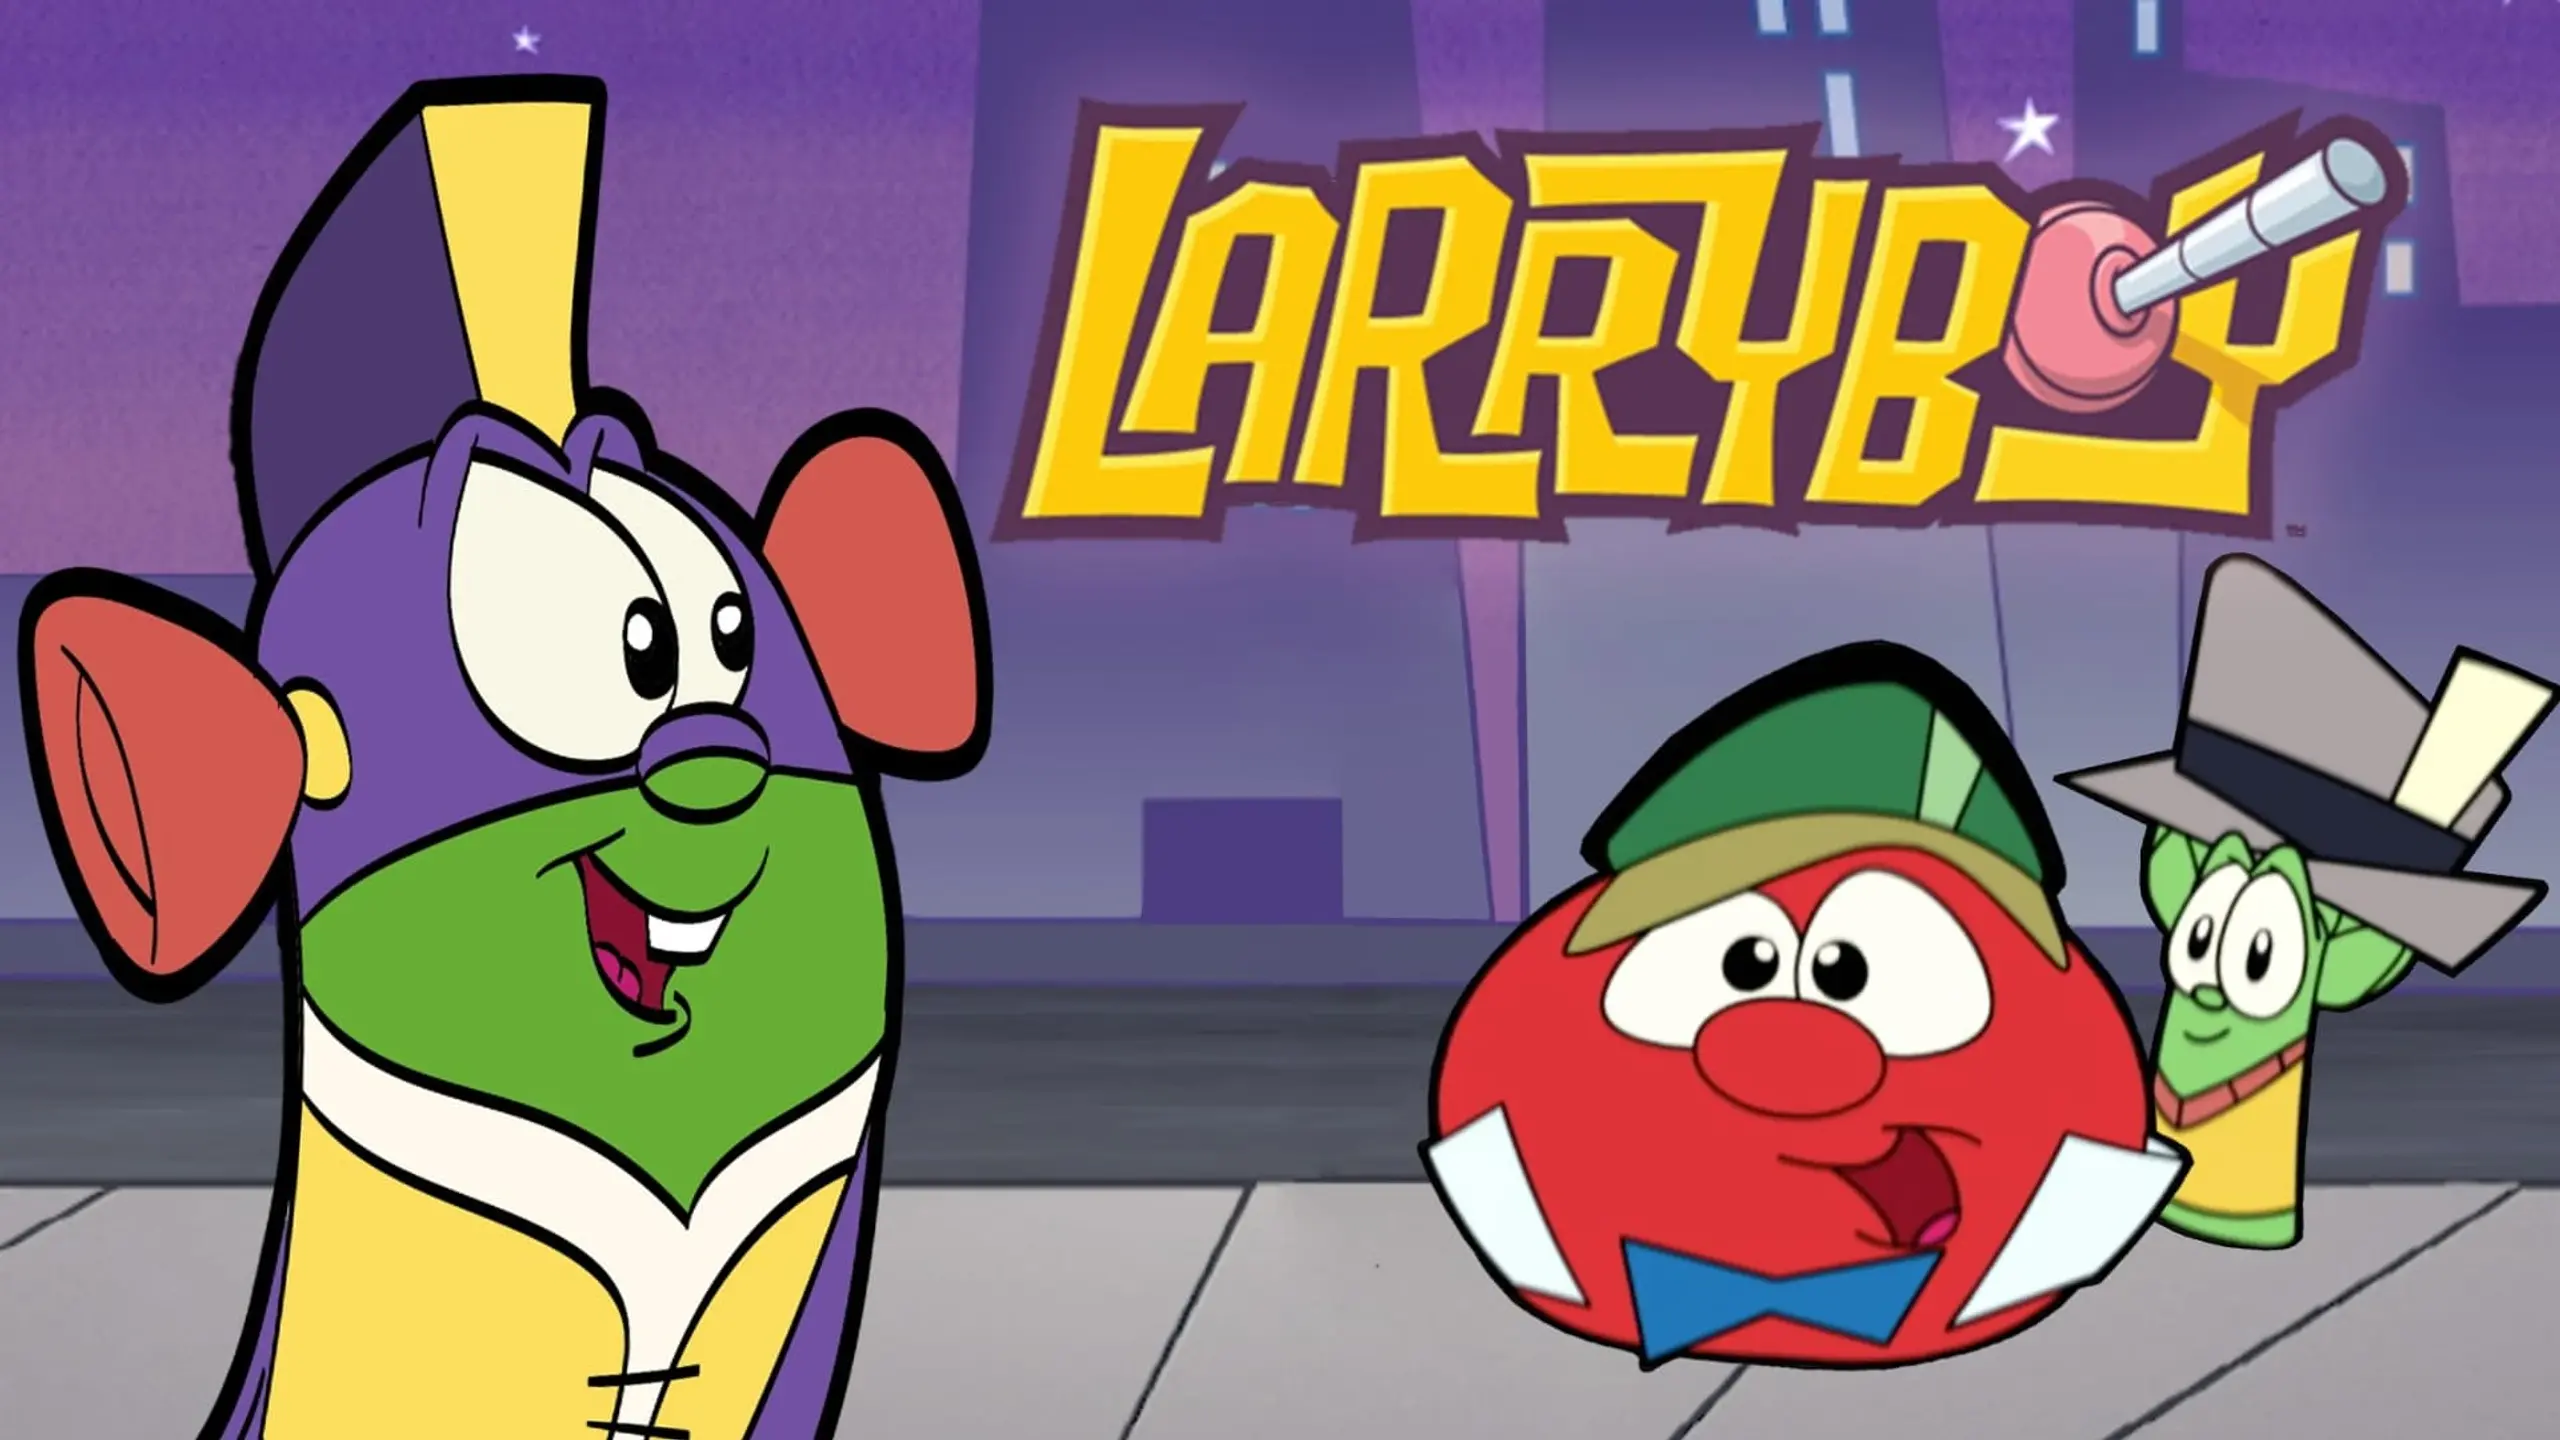 The Cartoon Adventures of Larryboy